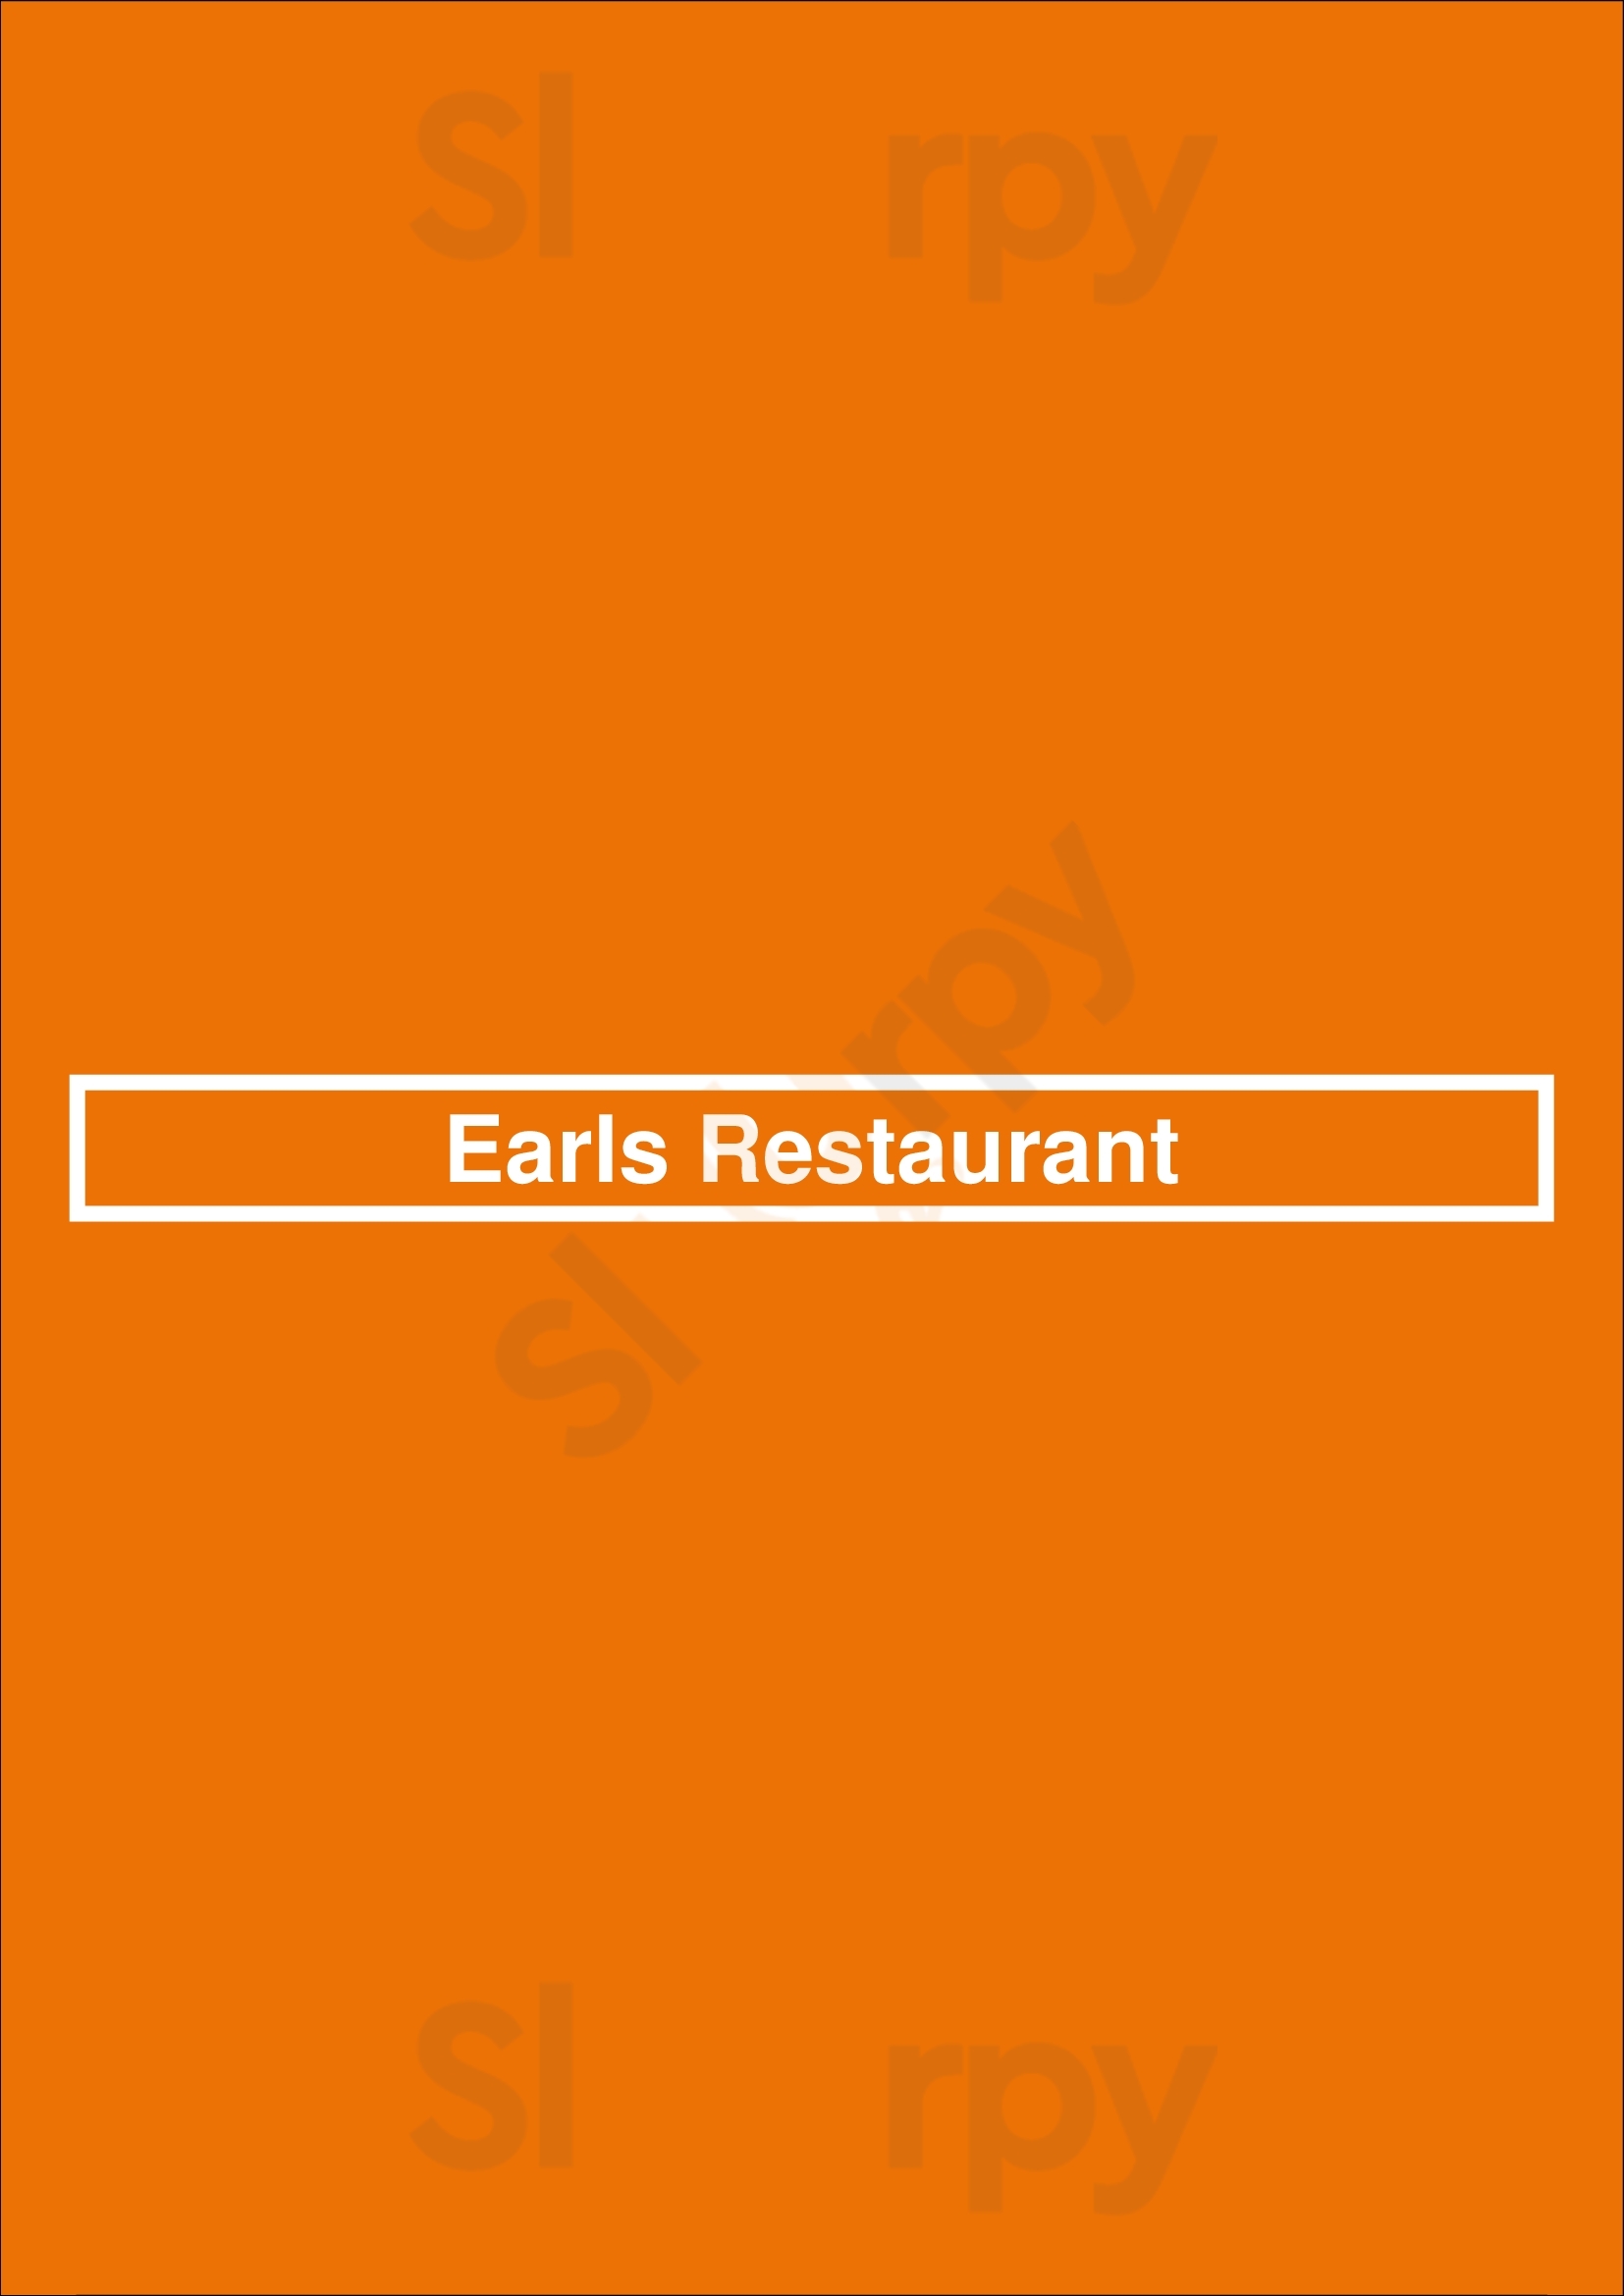 Earls Restaurant Vancouver Menu - 1